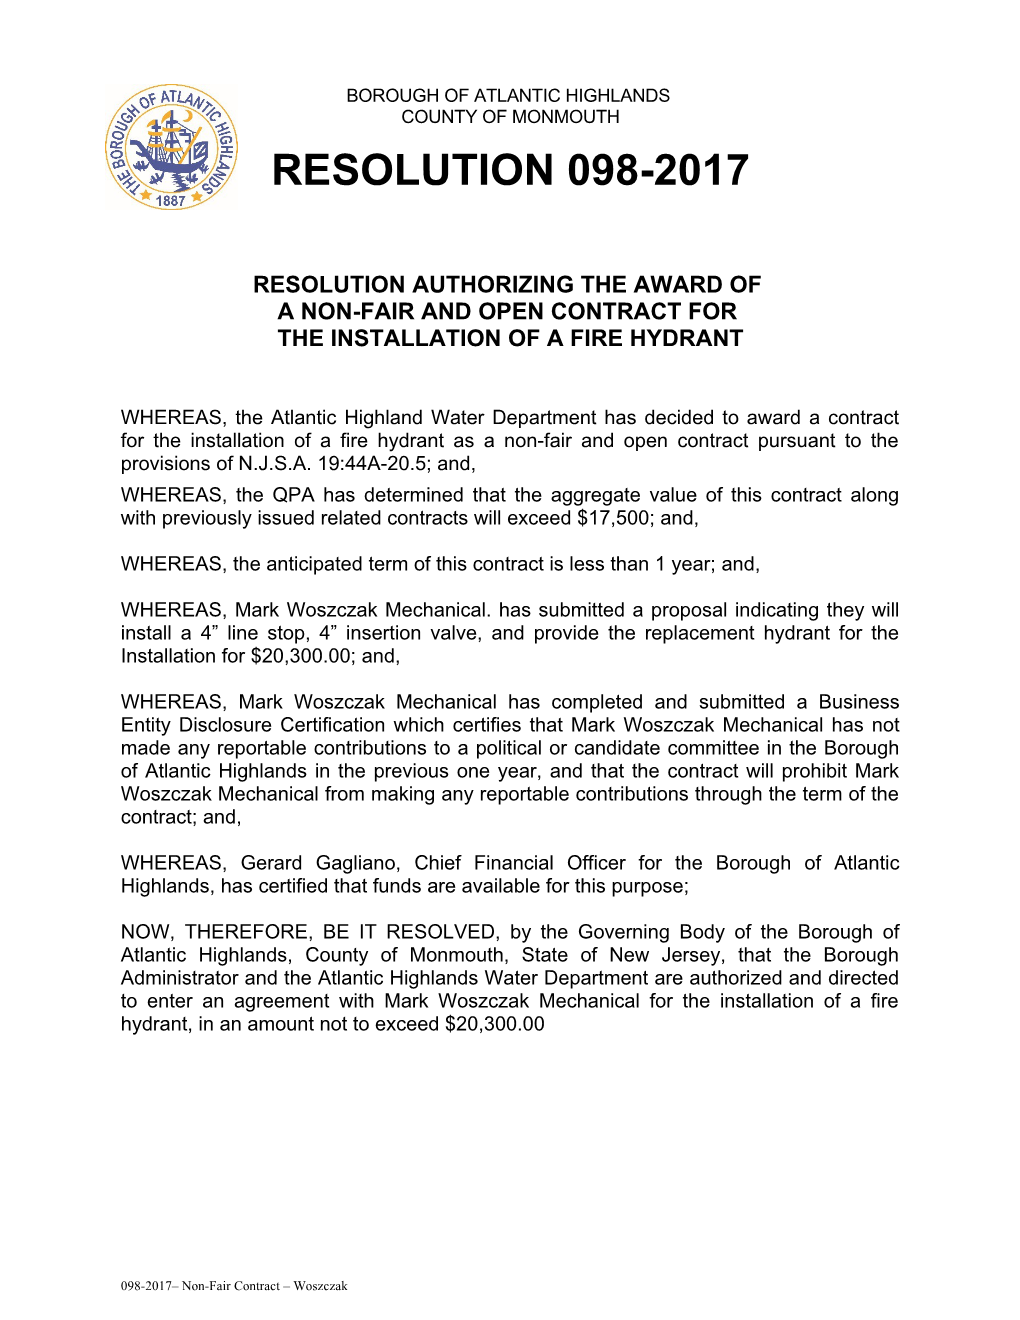 Resolution Authorizing the Award Of